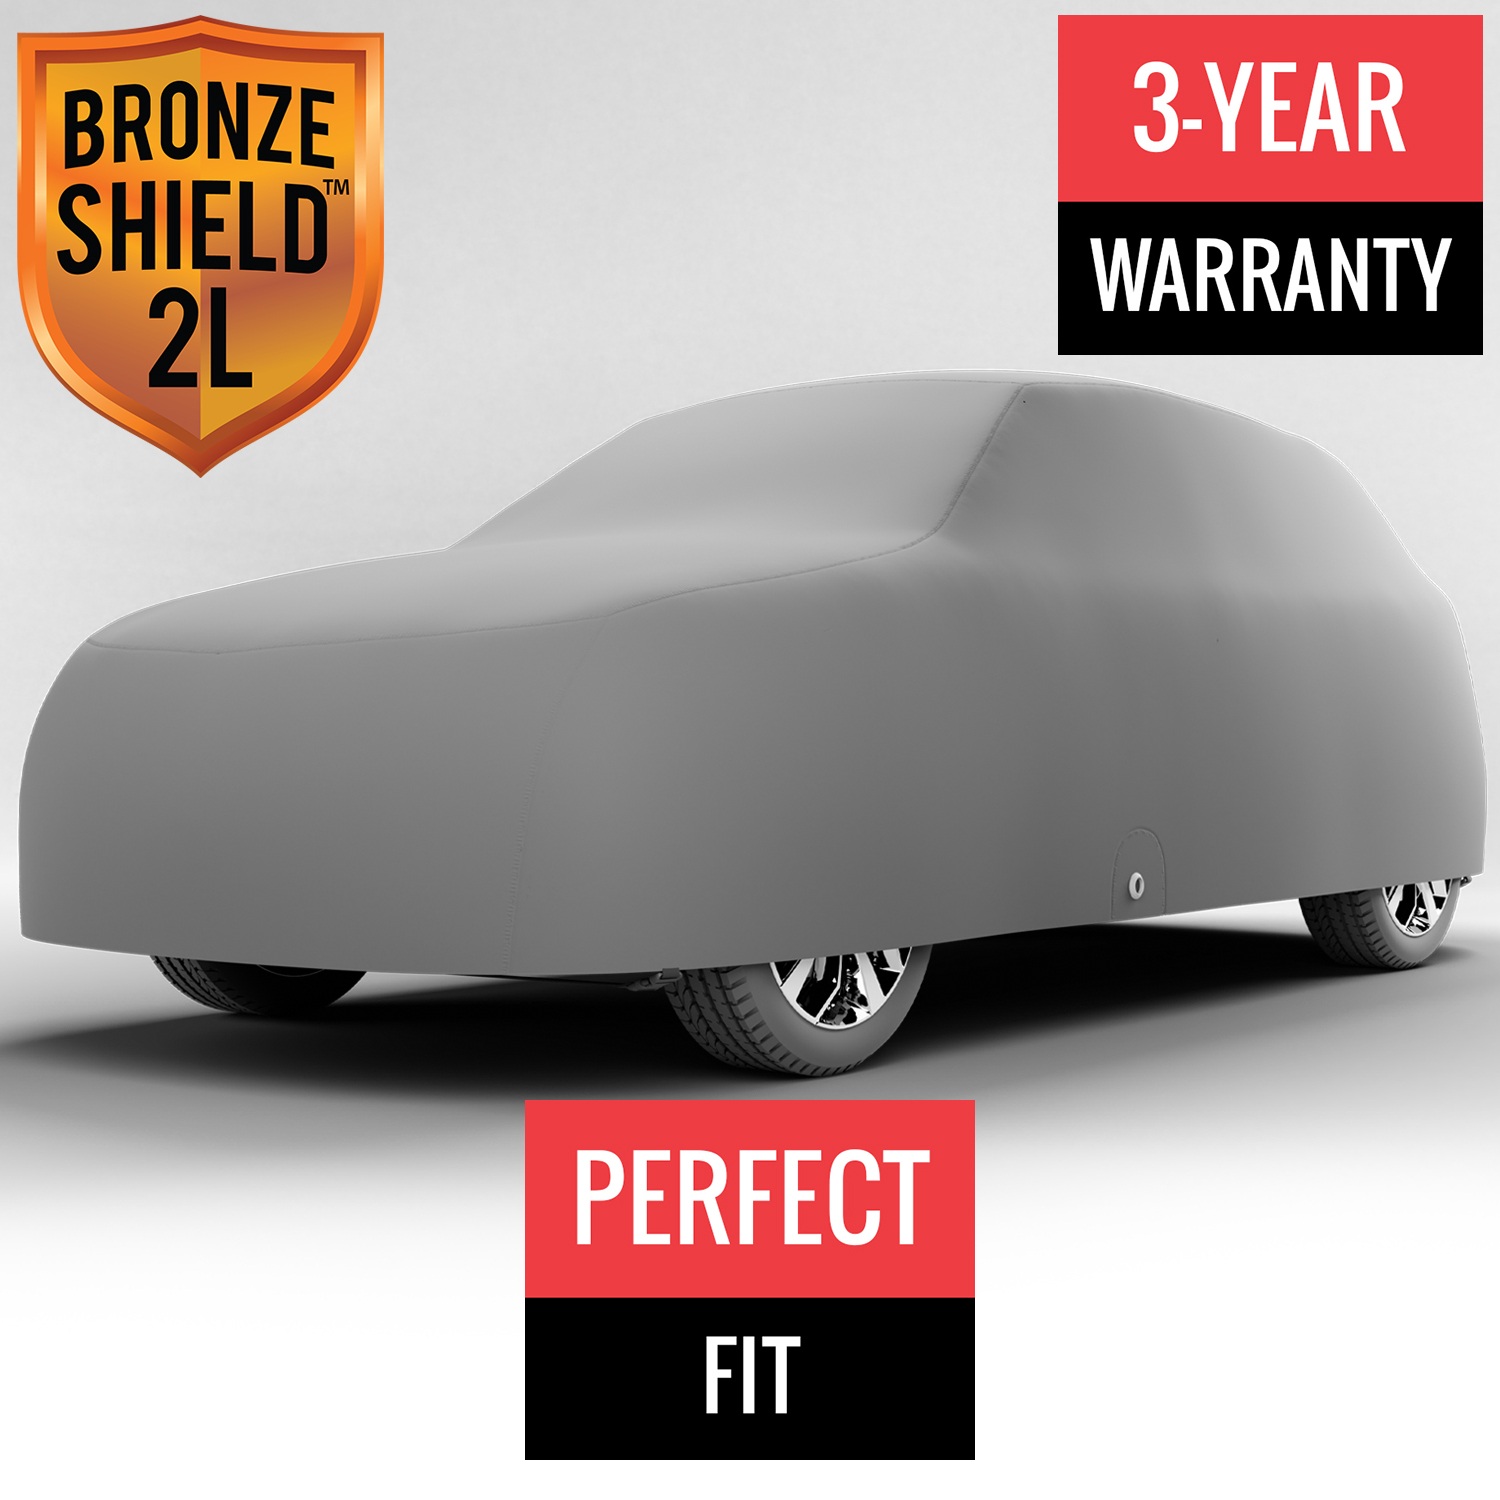 Bronze Shield 2L - Car Cover for Scion xB 2016 Wagon 4-Door